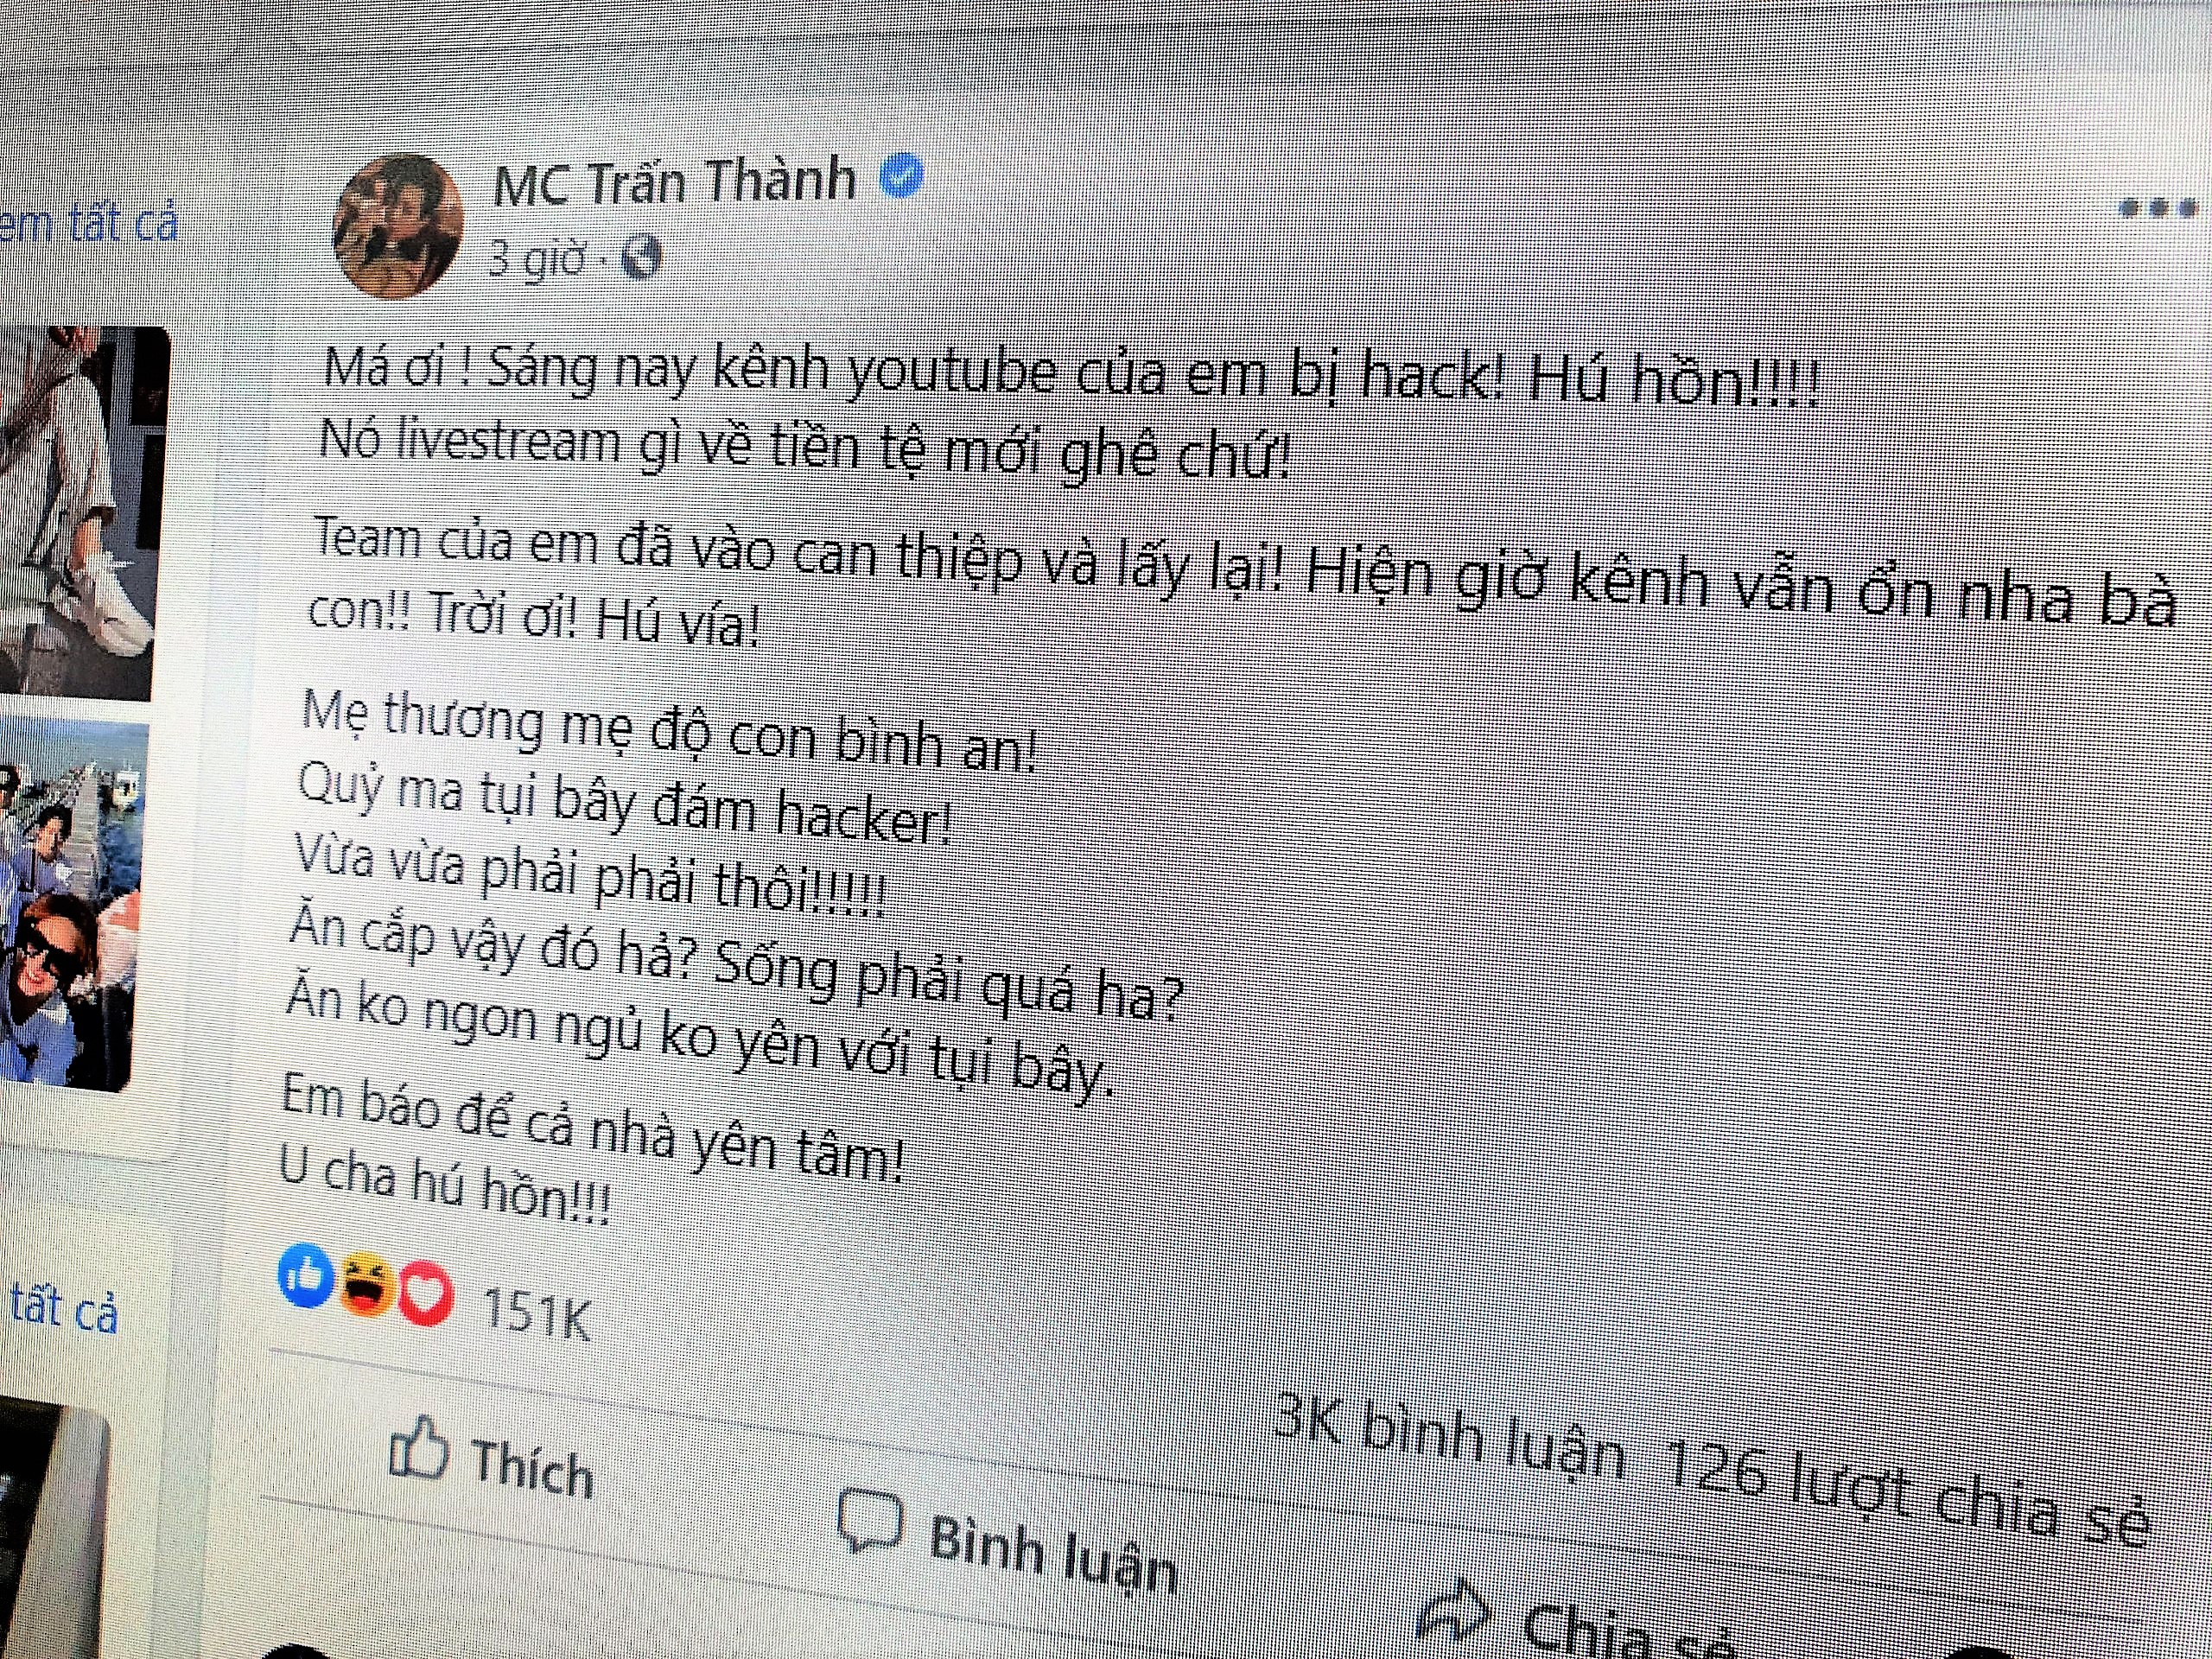 Kenh YouTube cua Tran Thanh bi hack anh 1